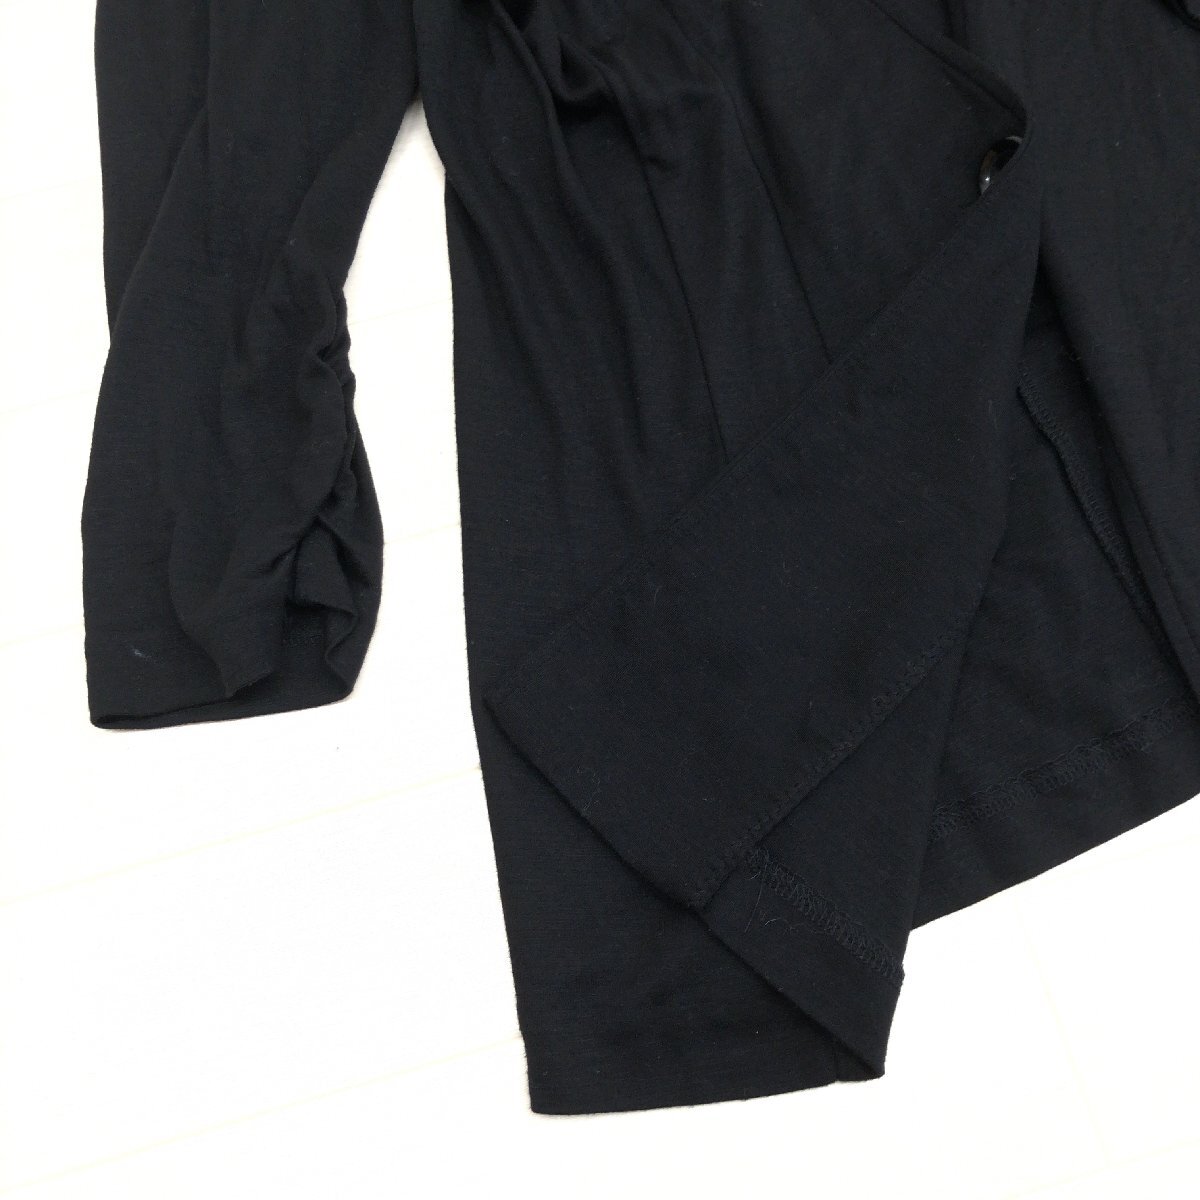 MICHEL KLEIN Michel Klein pleat ensemble 40(L) black black cardigan no sleeve cut and sewn spring summer lady's for women 